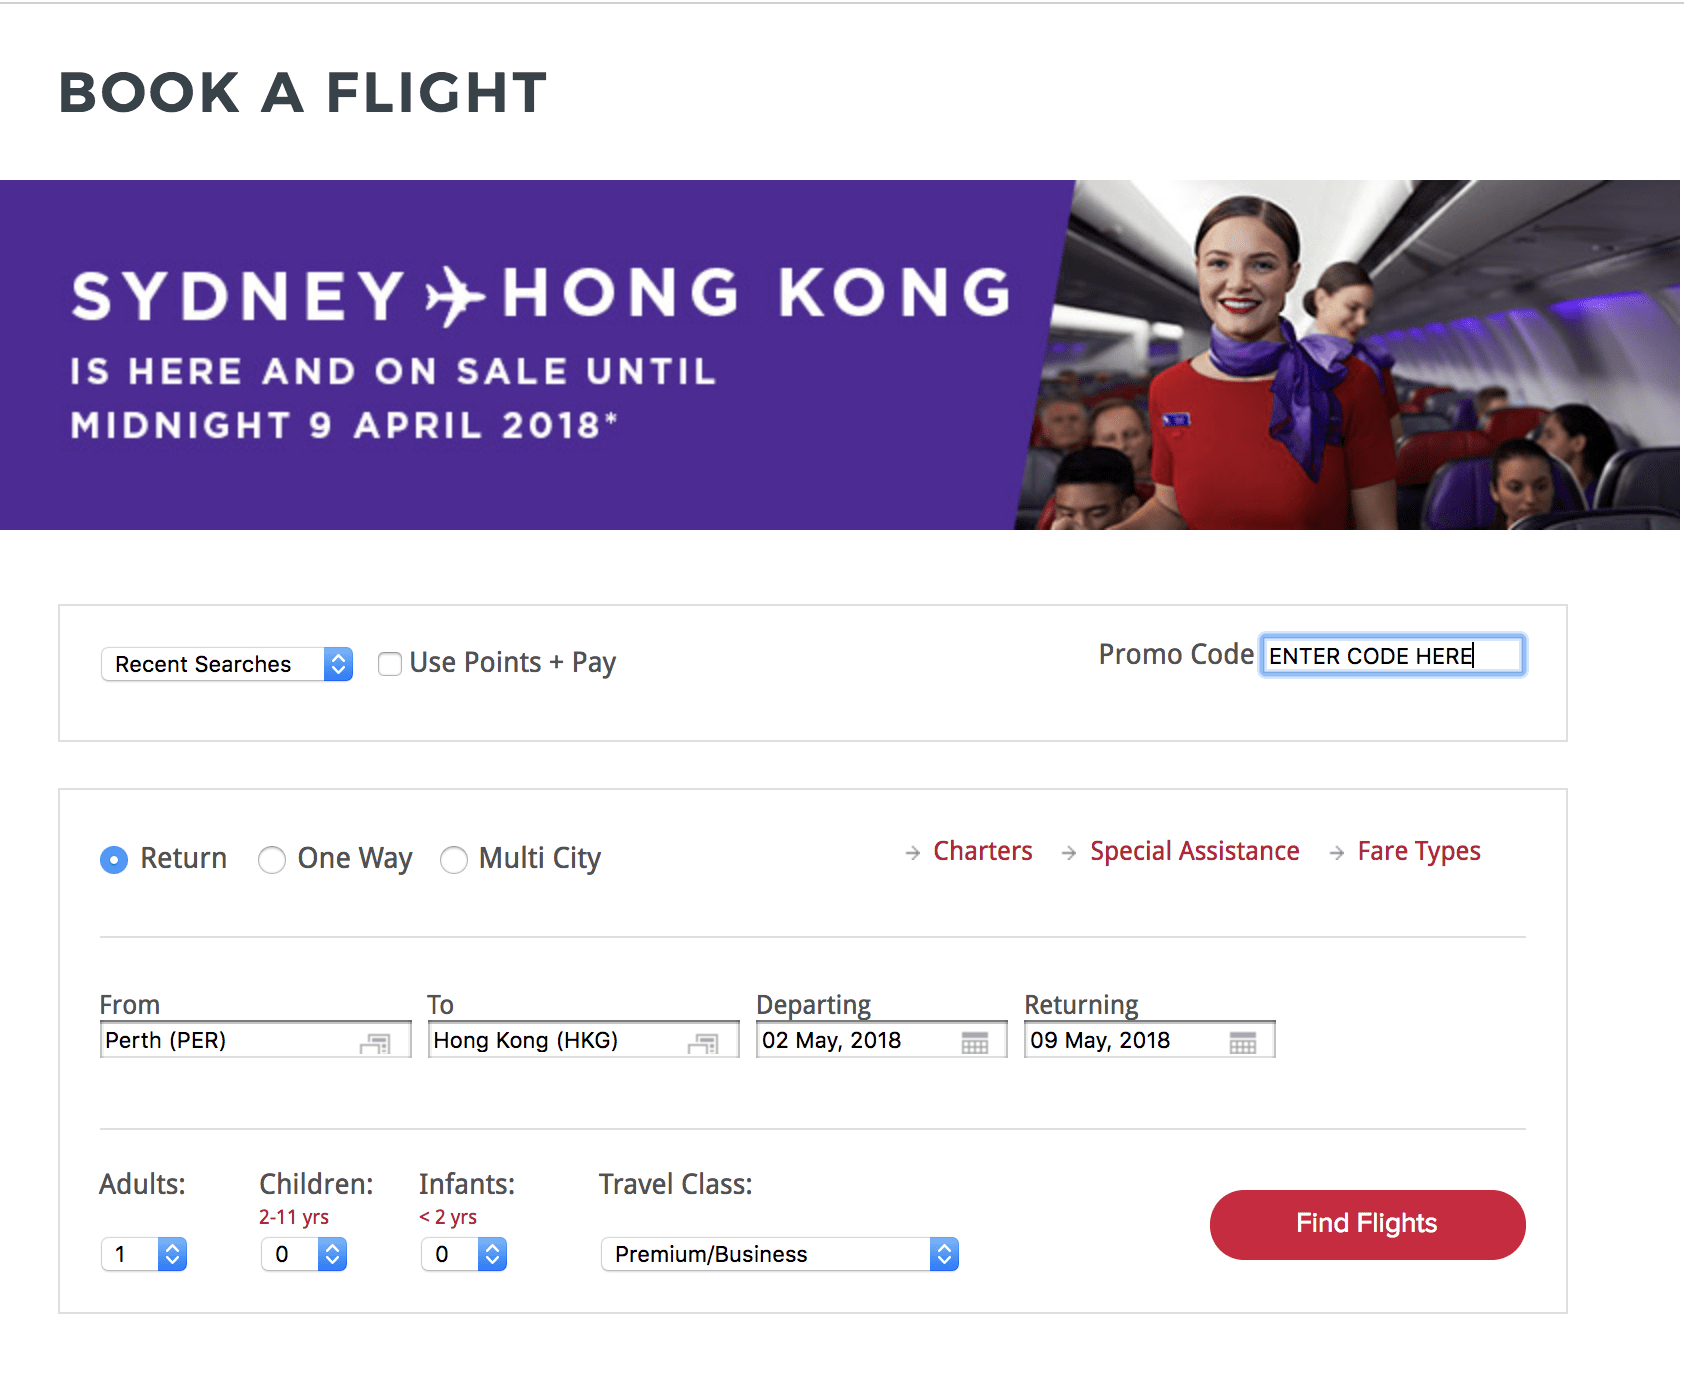 Virgin Australia The Business To Hong Kong Return For Only $ 1748.34 7